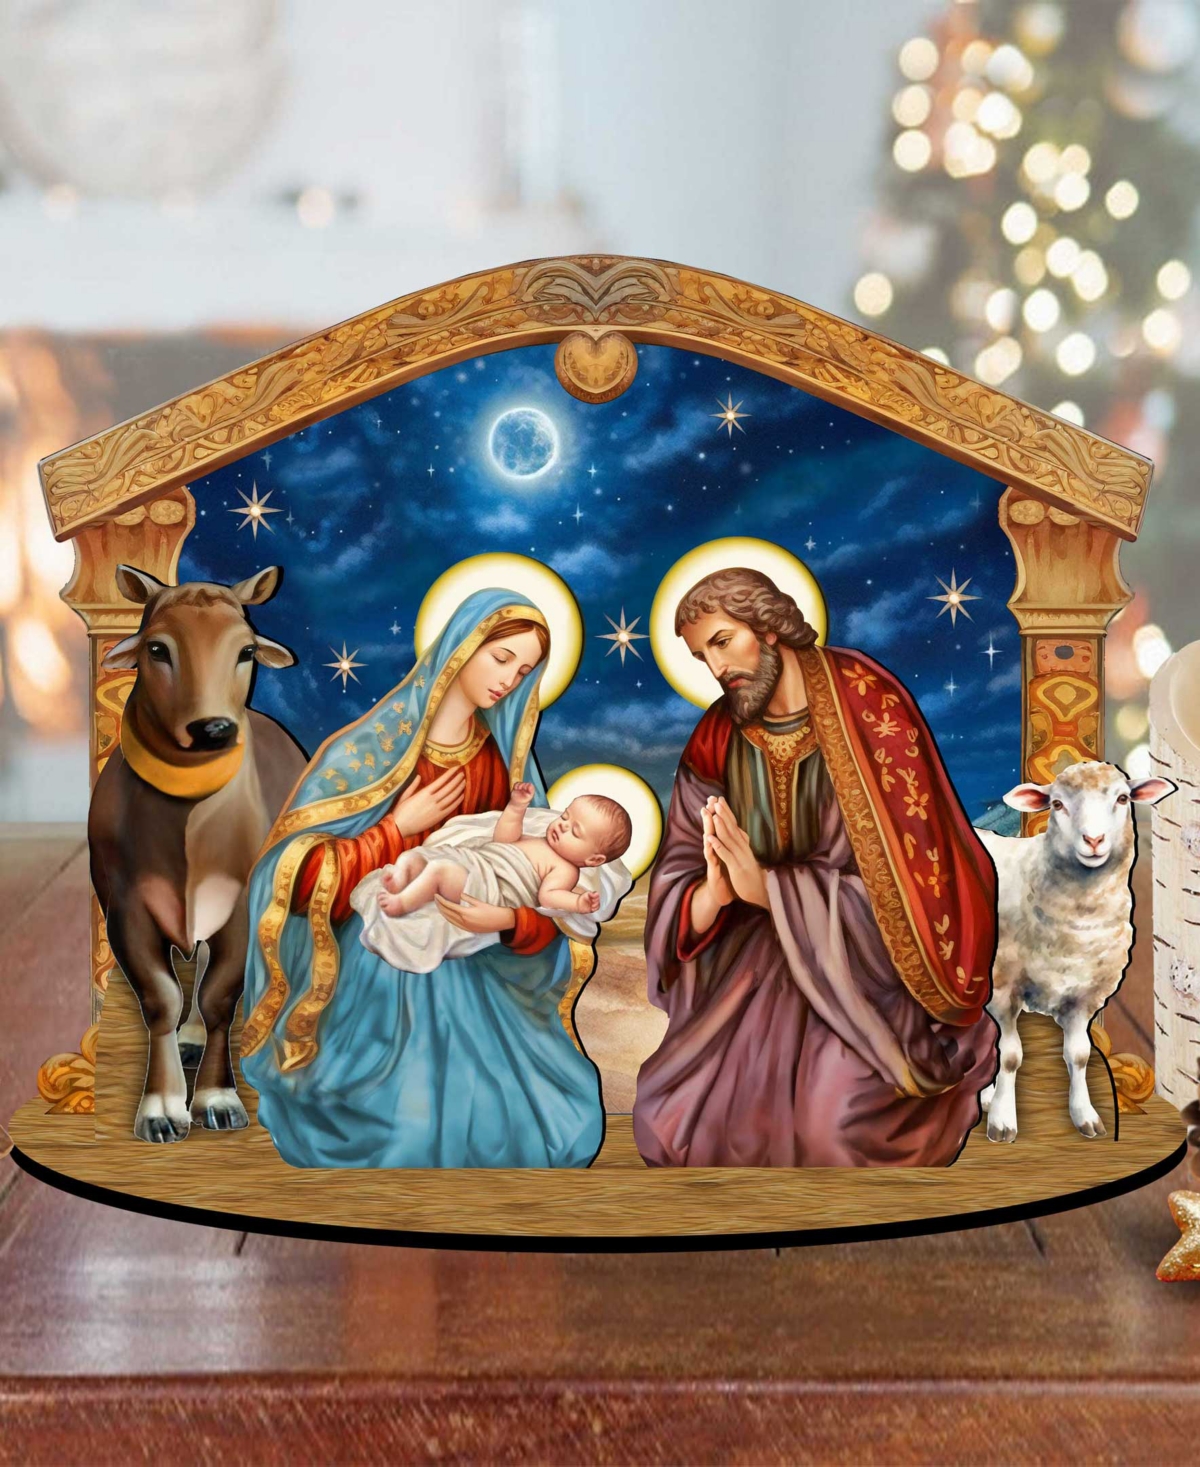 Designocracy Holy Family Nativity Scene Christmas Village 7" Table Decoration G. Debrekht In Multi Color